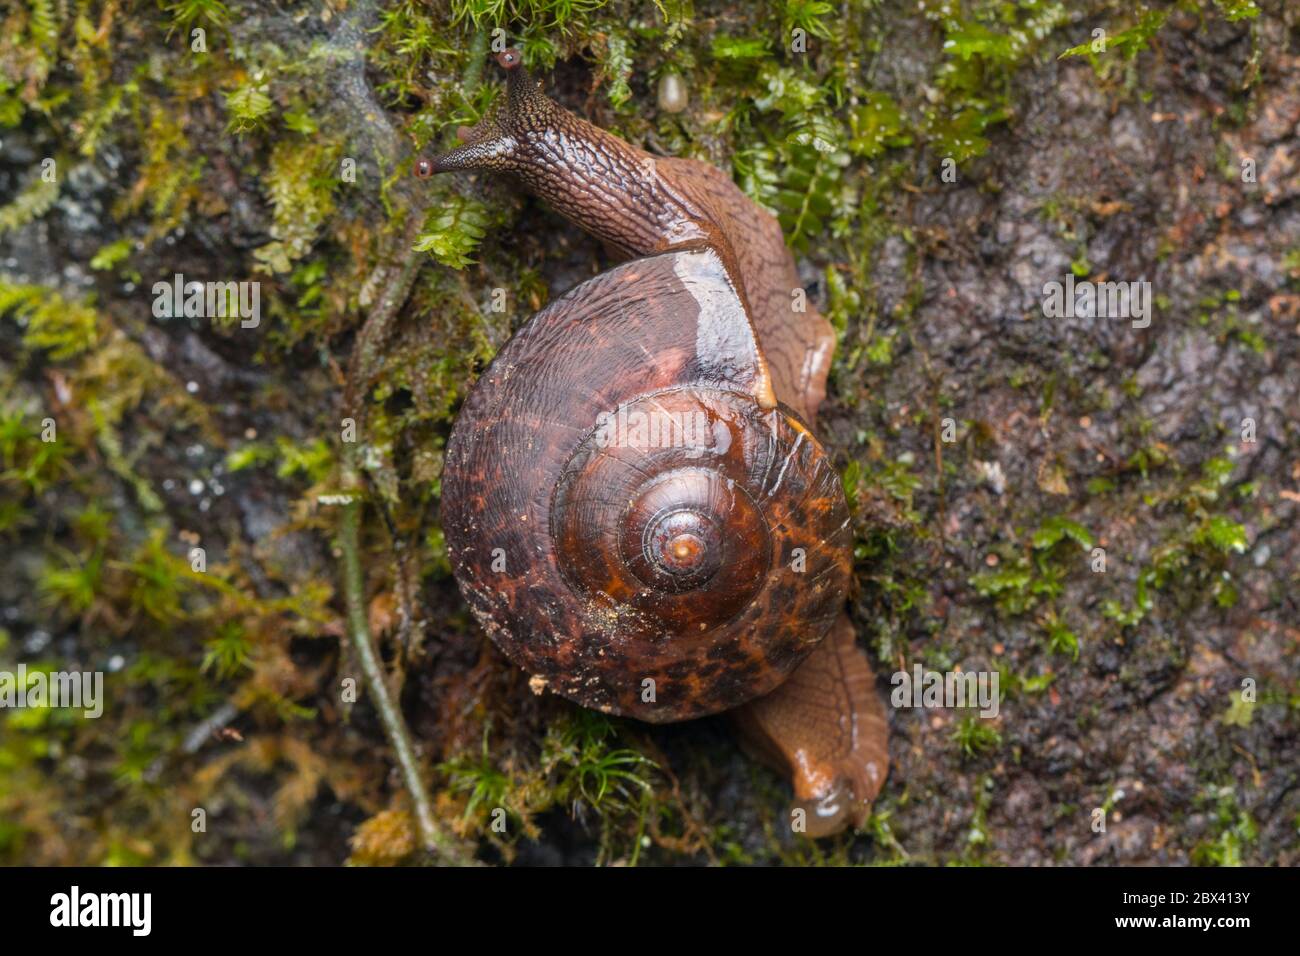 Macro image of Snail of Borneo - Nature wildlife concept Stock Photo